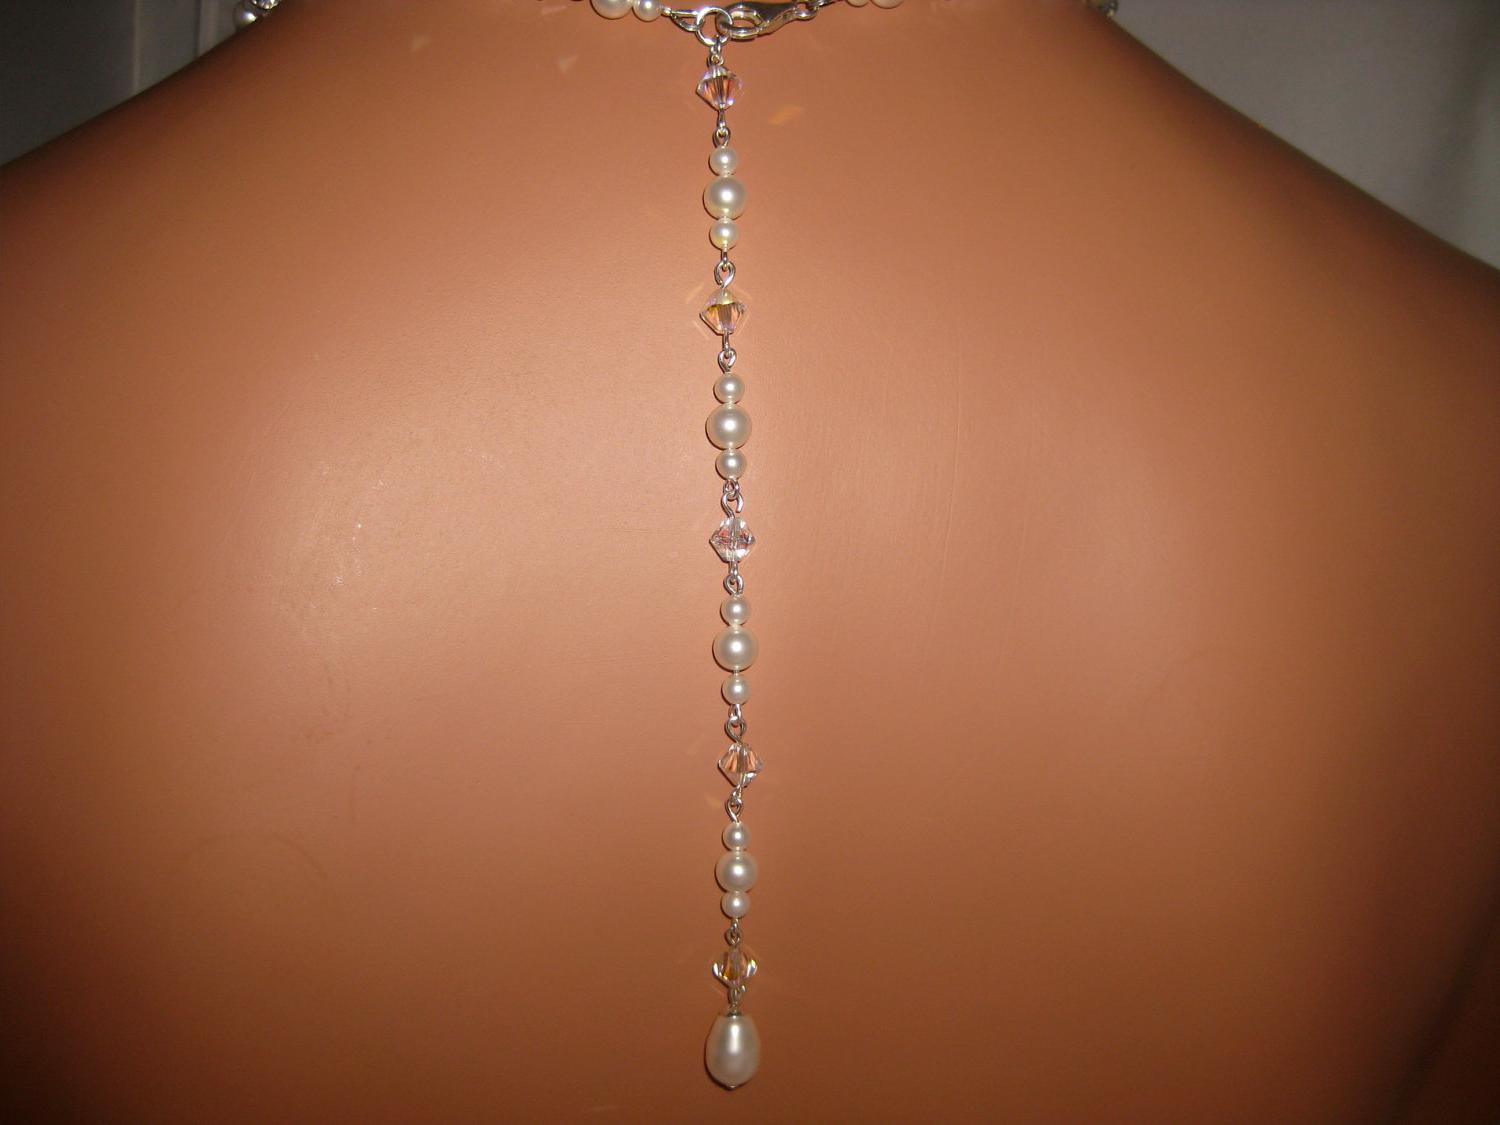 Wedding necklace - Swarovski pearl and crystal backdrop necklace